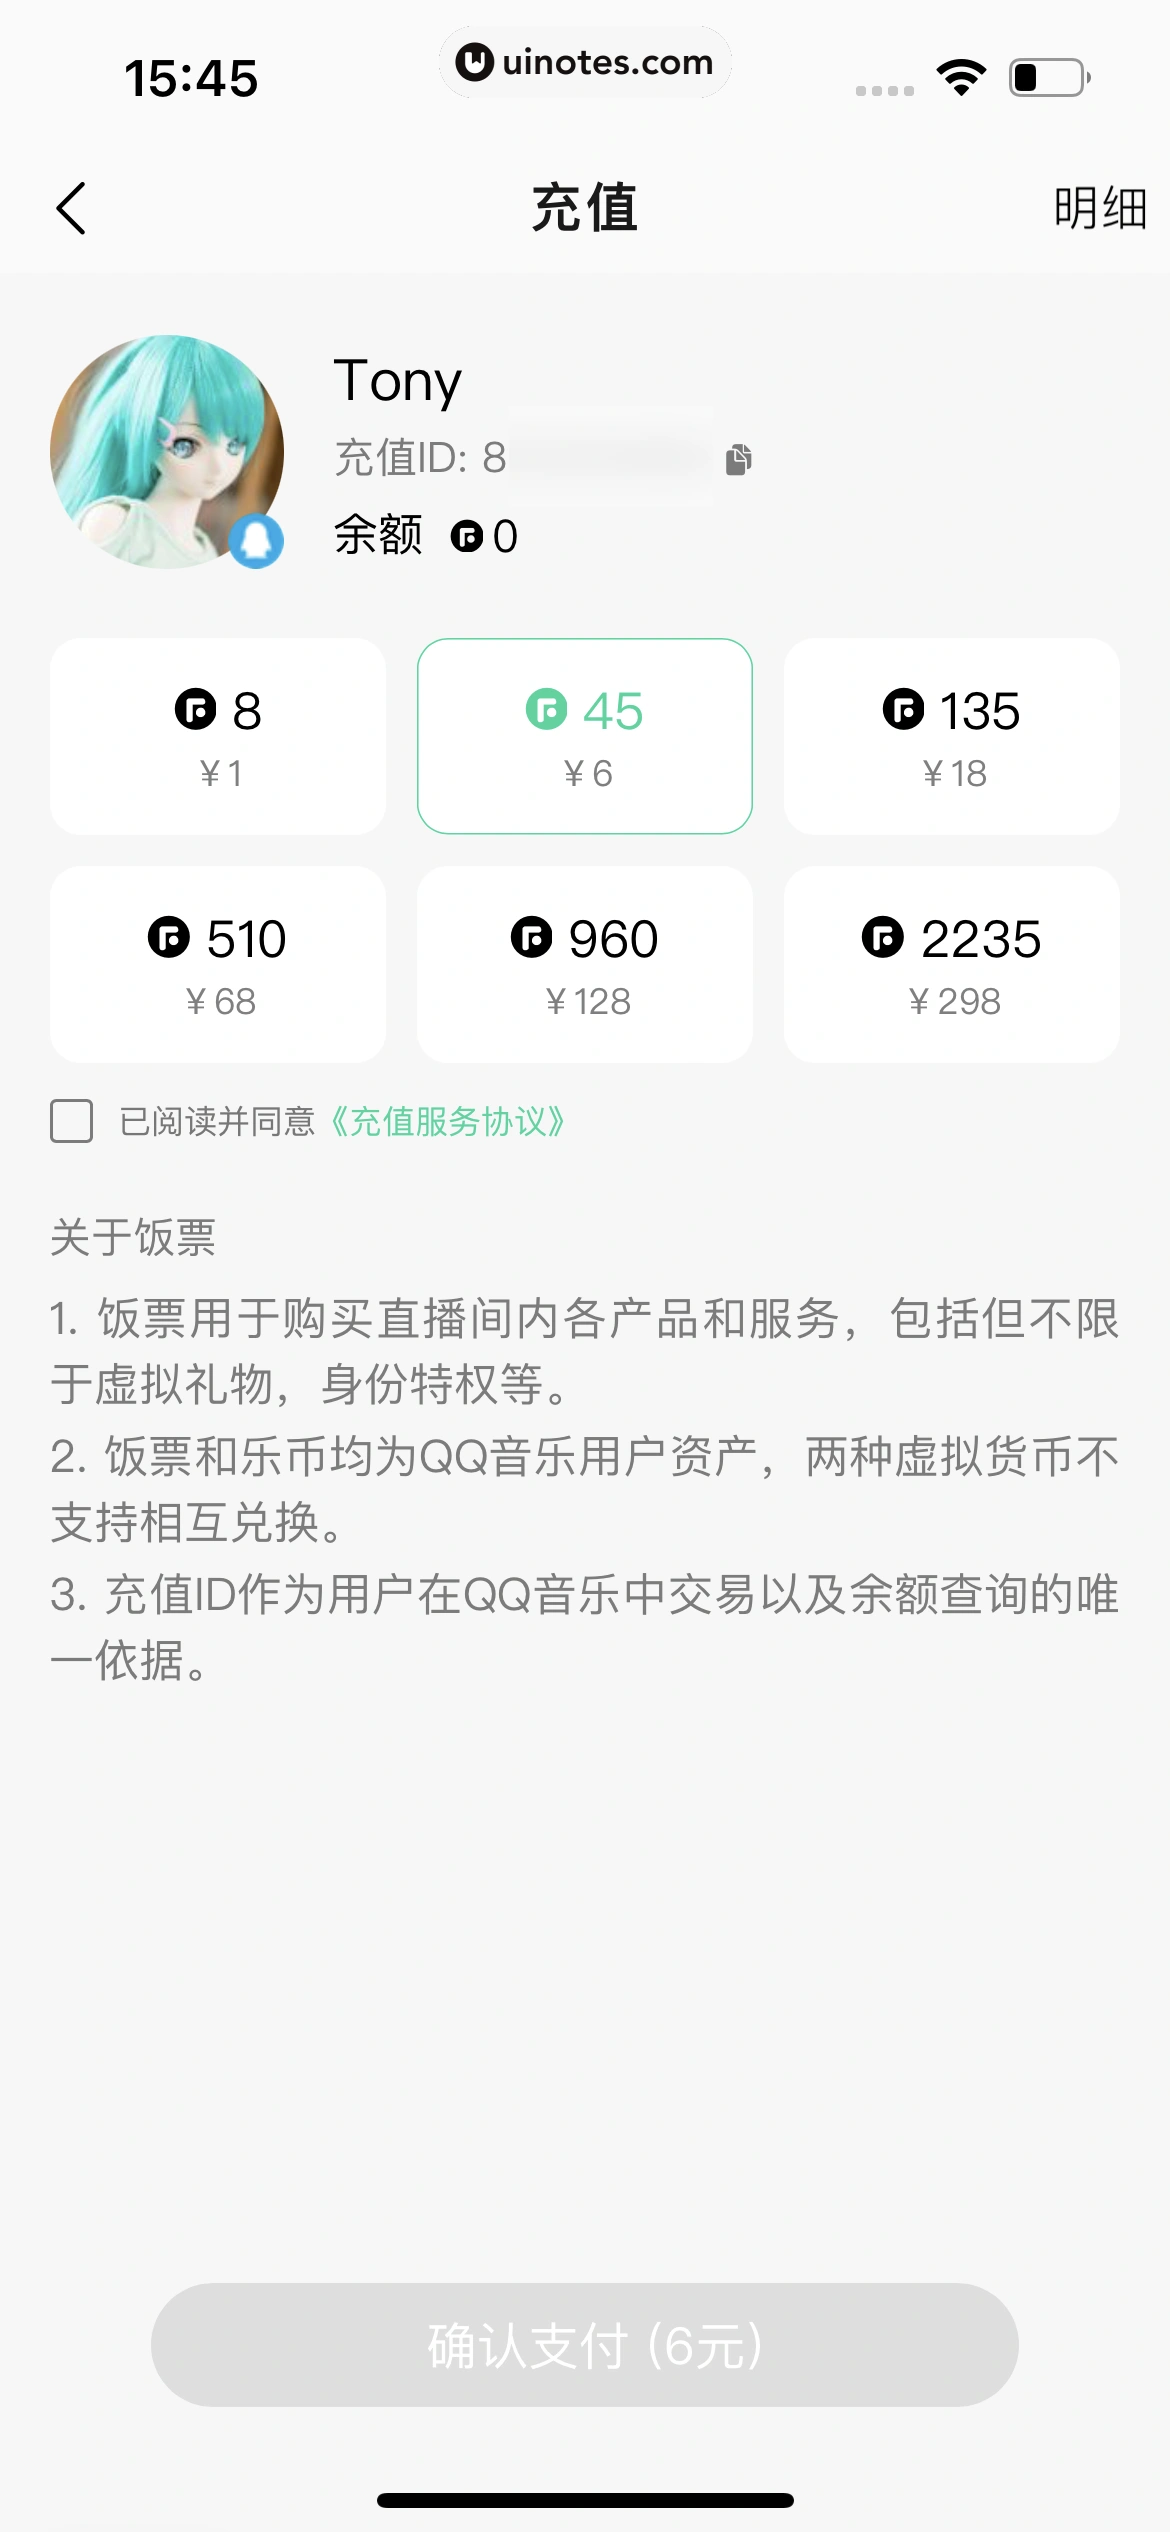 QQ音乐 App 截图 388 - UI Notes